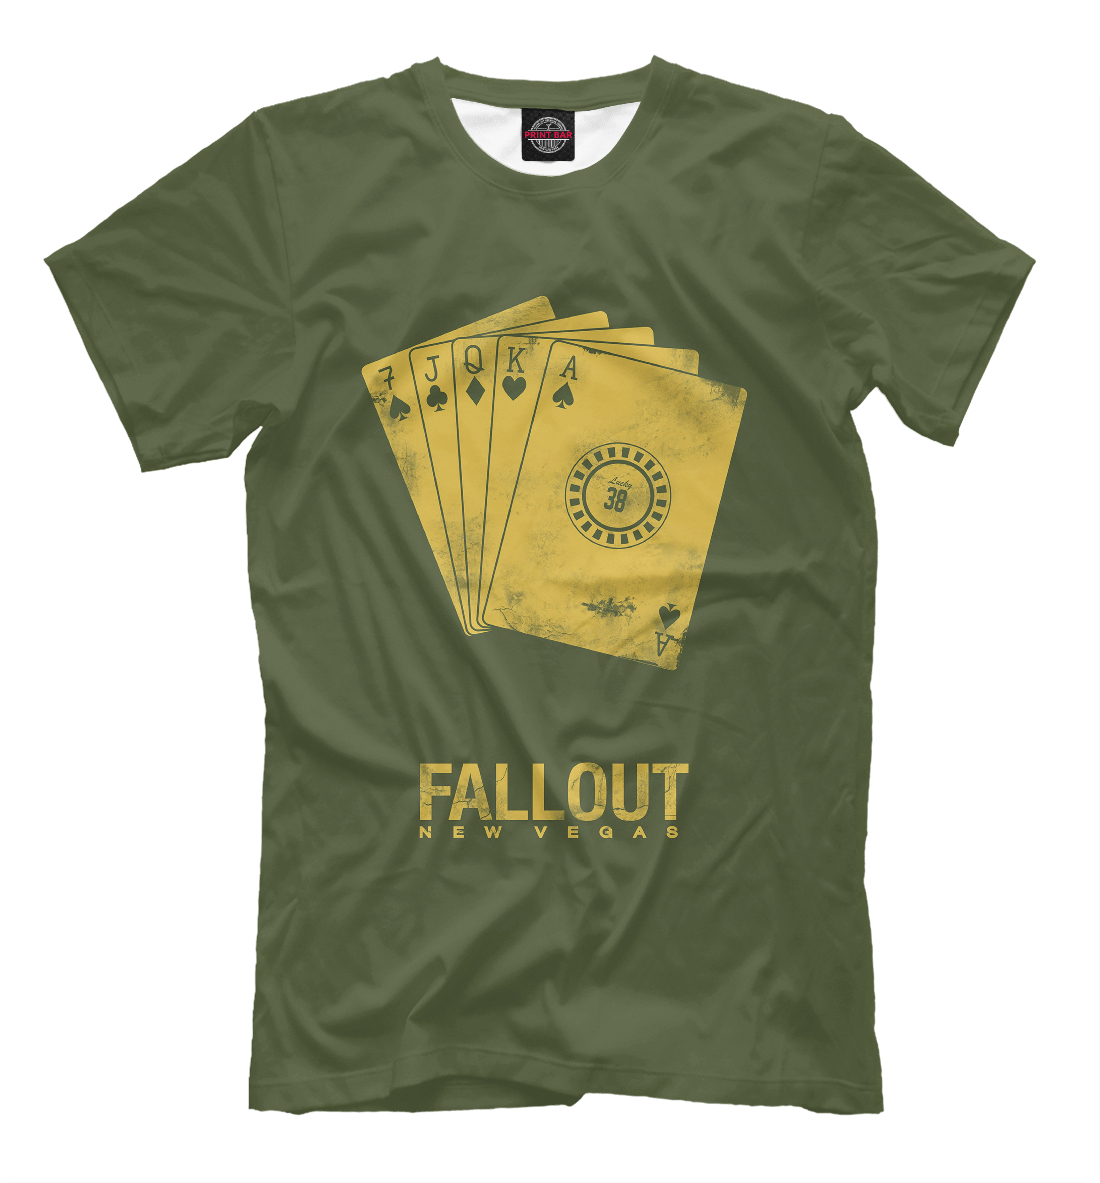 Футболка Fallout New Vegas для мальчиков, артикул: FOT-162114-fut-2mp